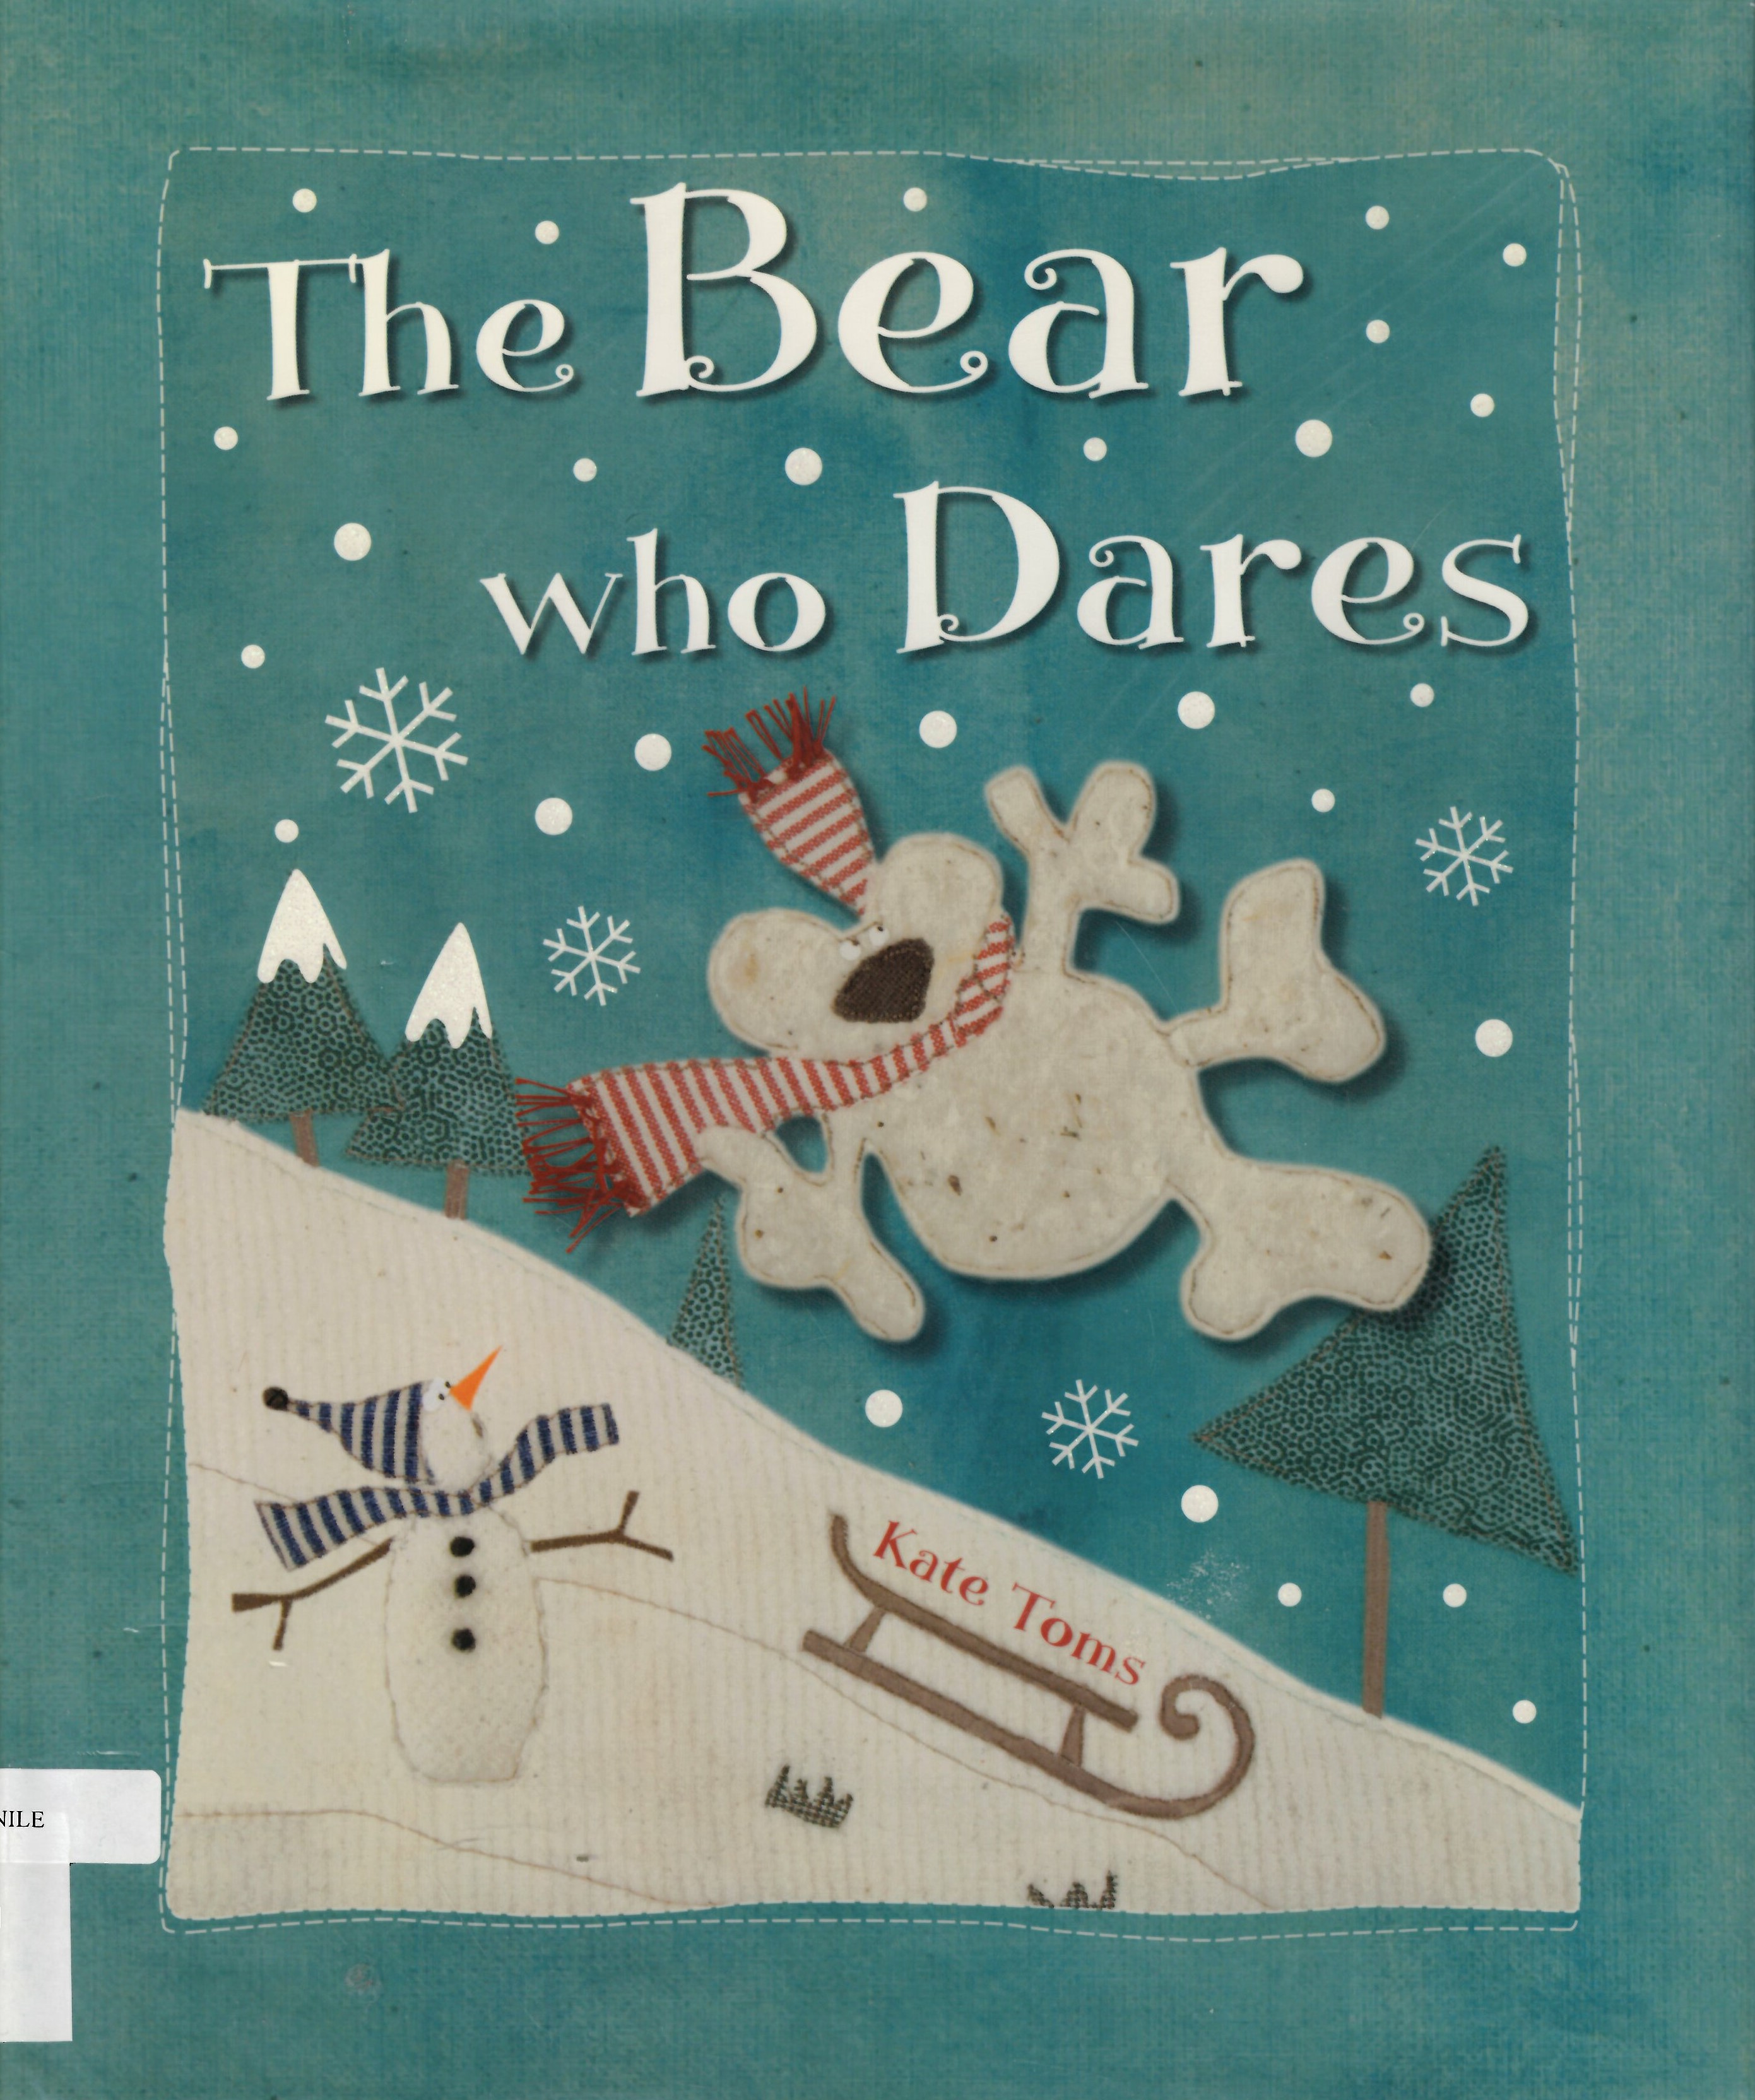 The bear who dares